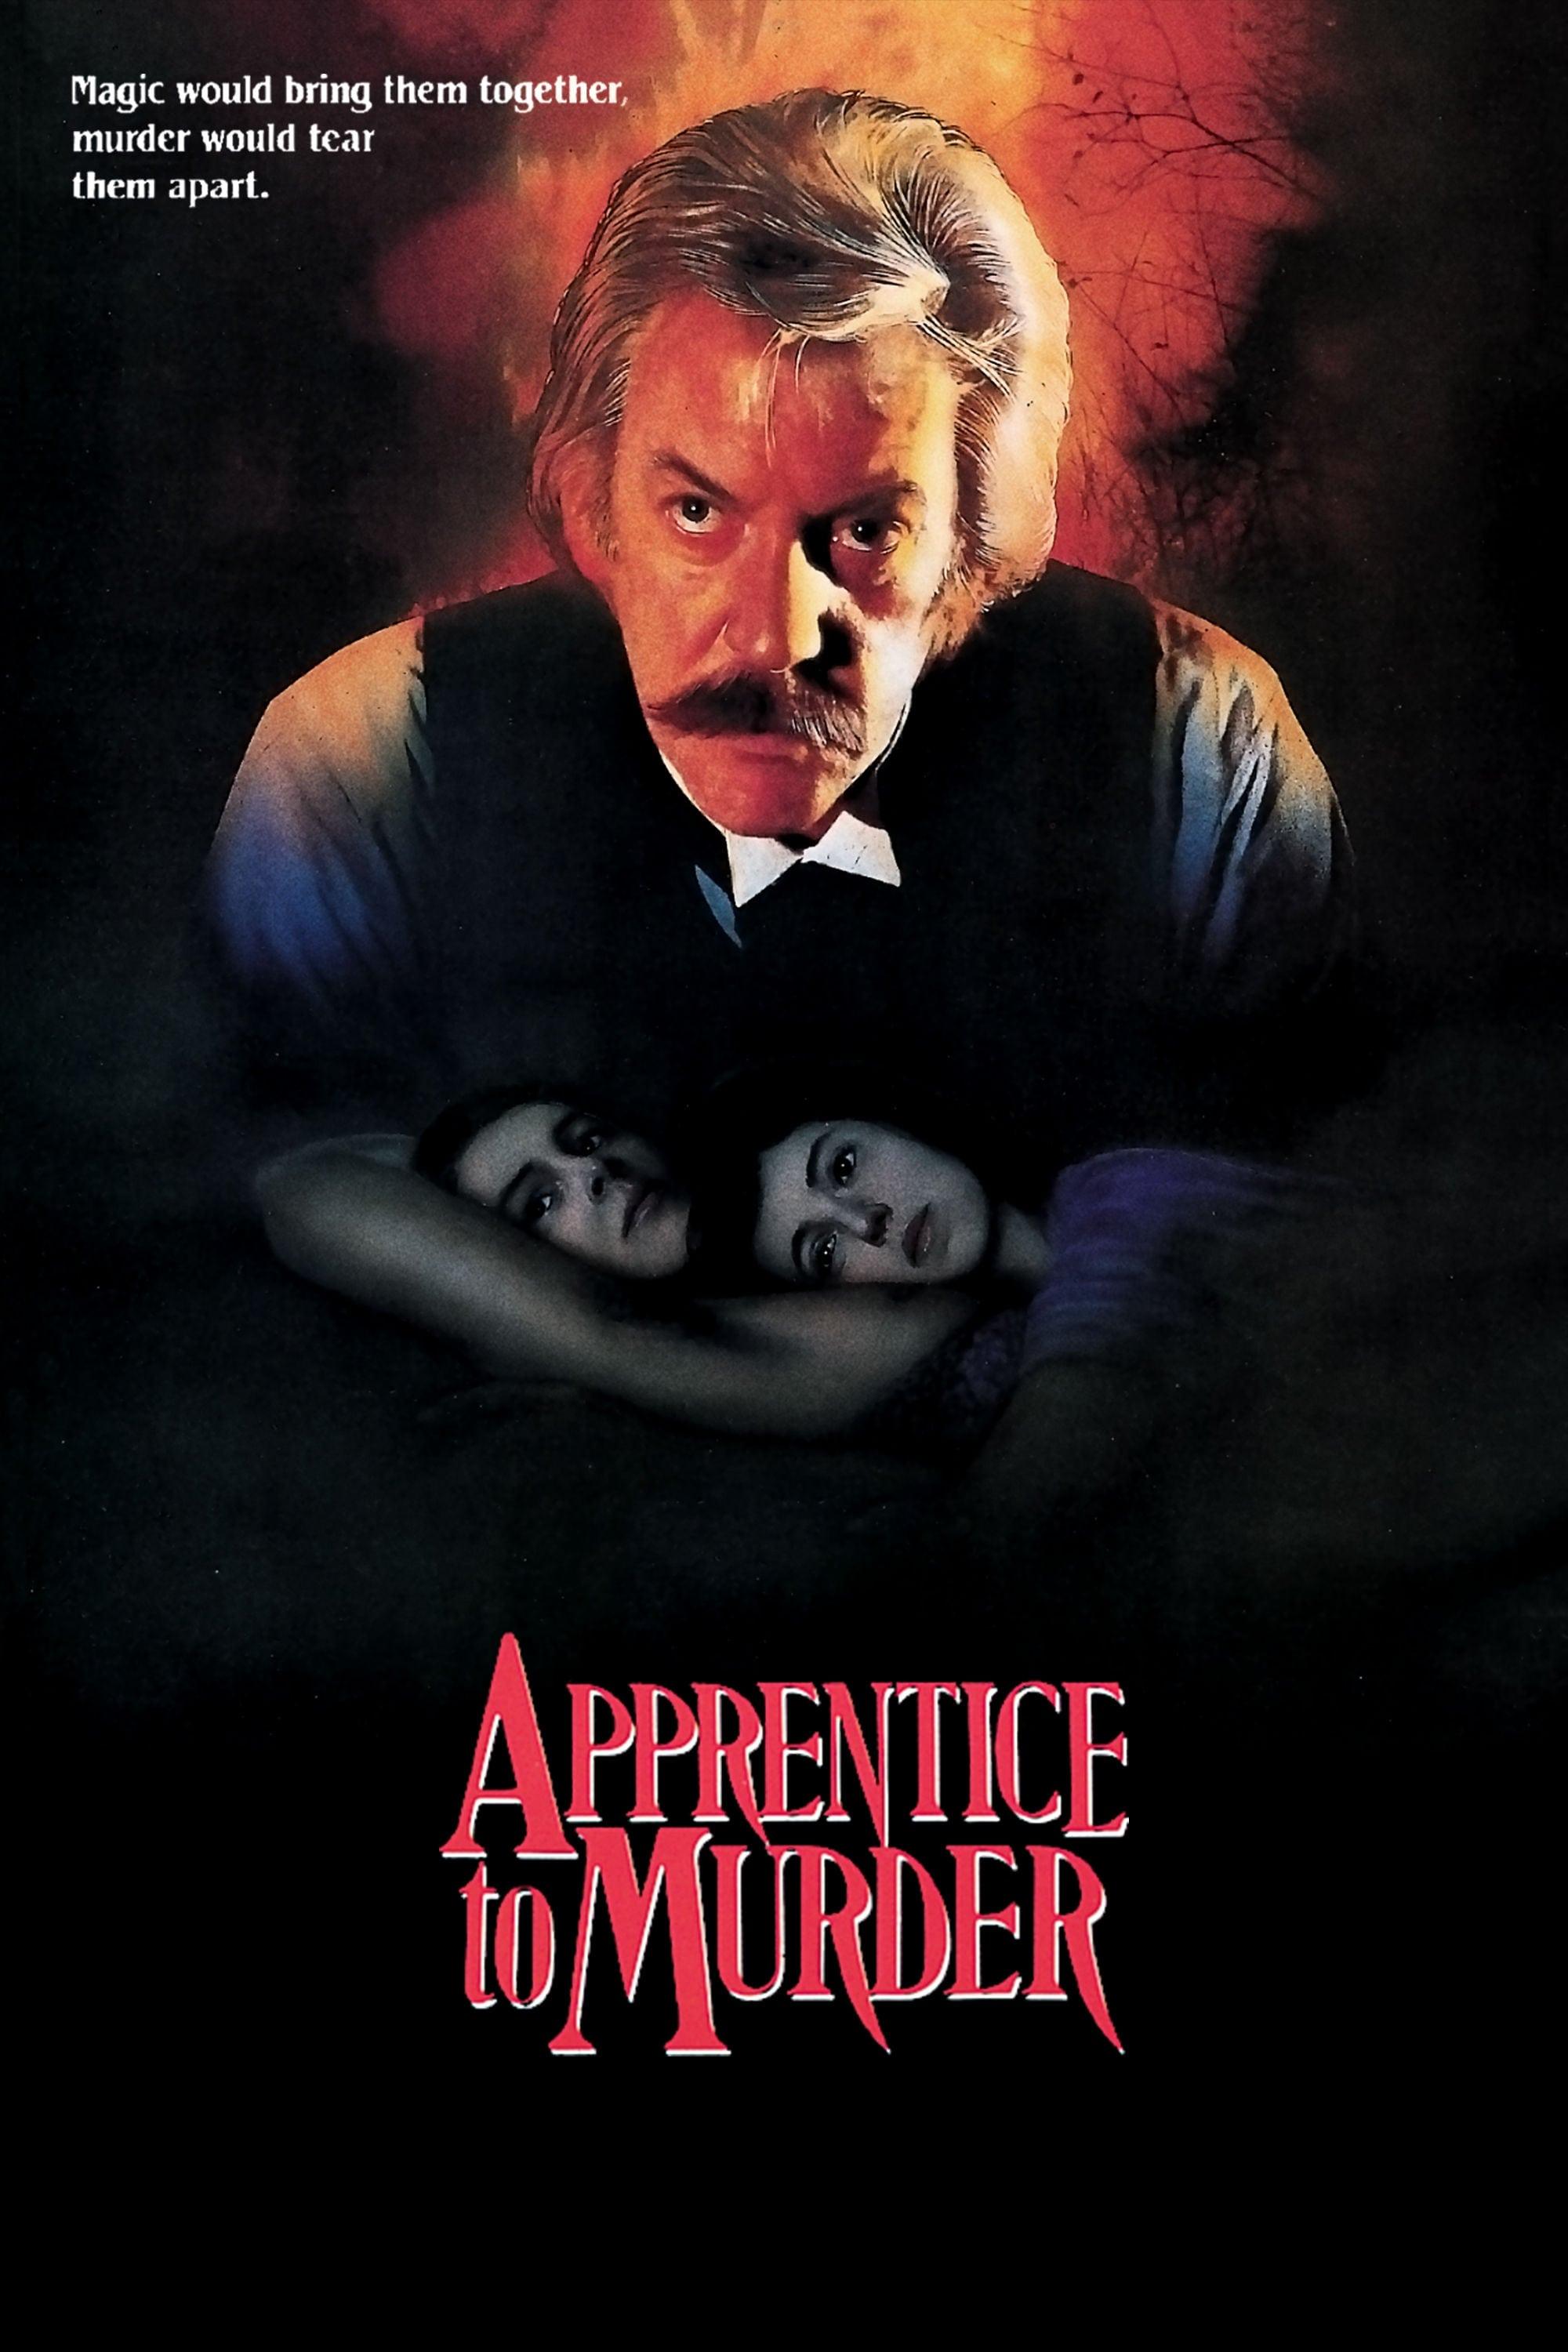 Apprentice to Murder poster